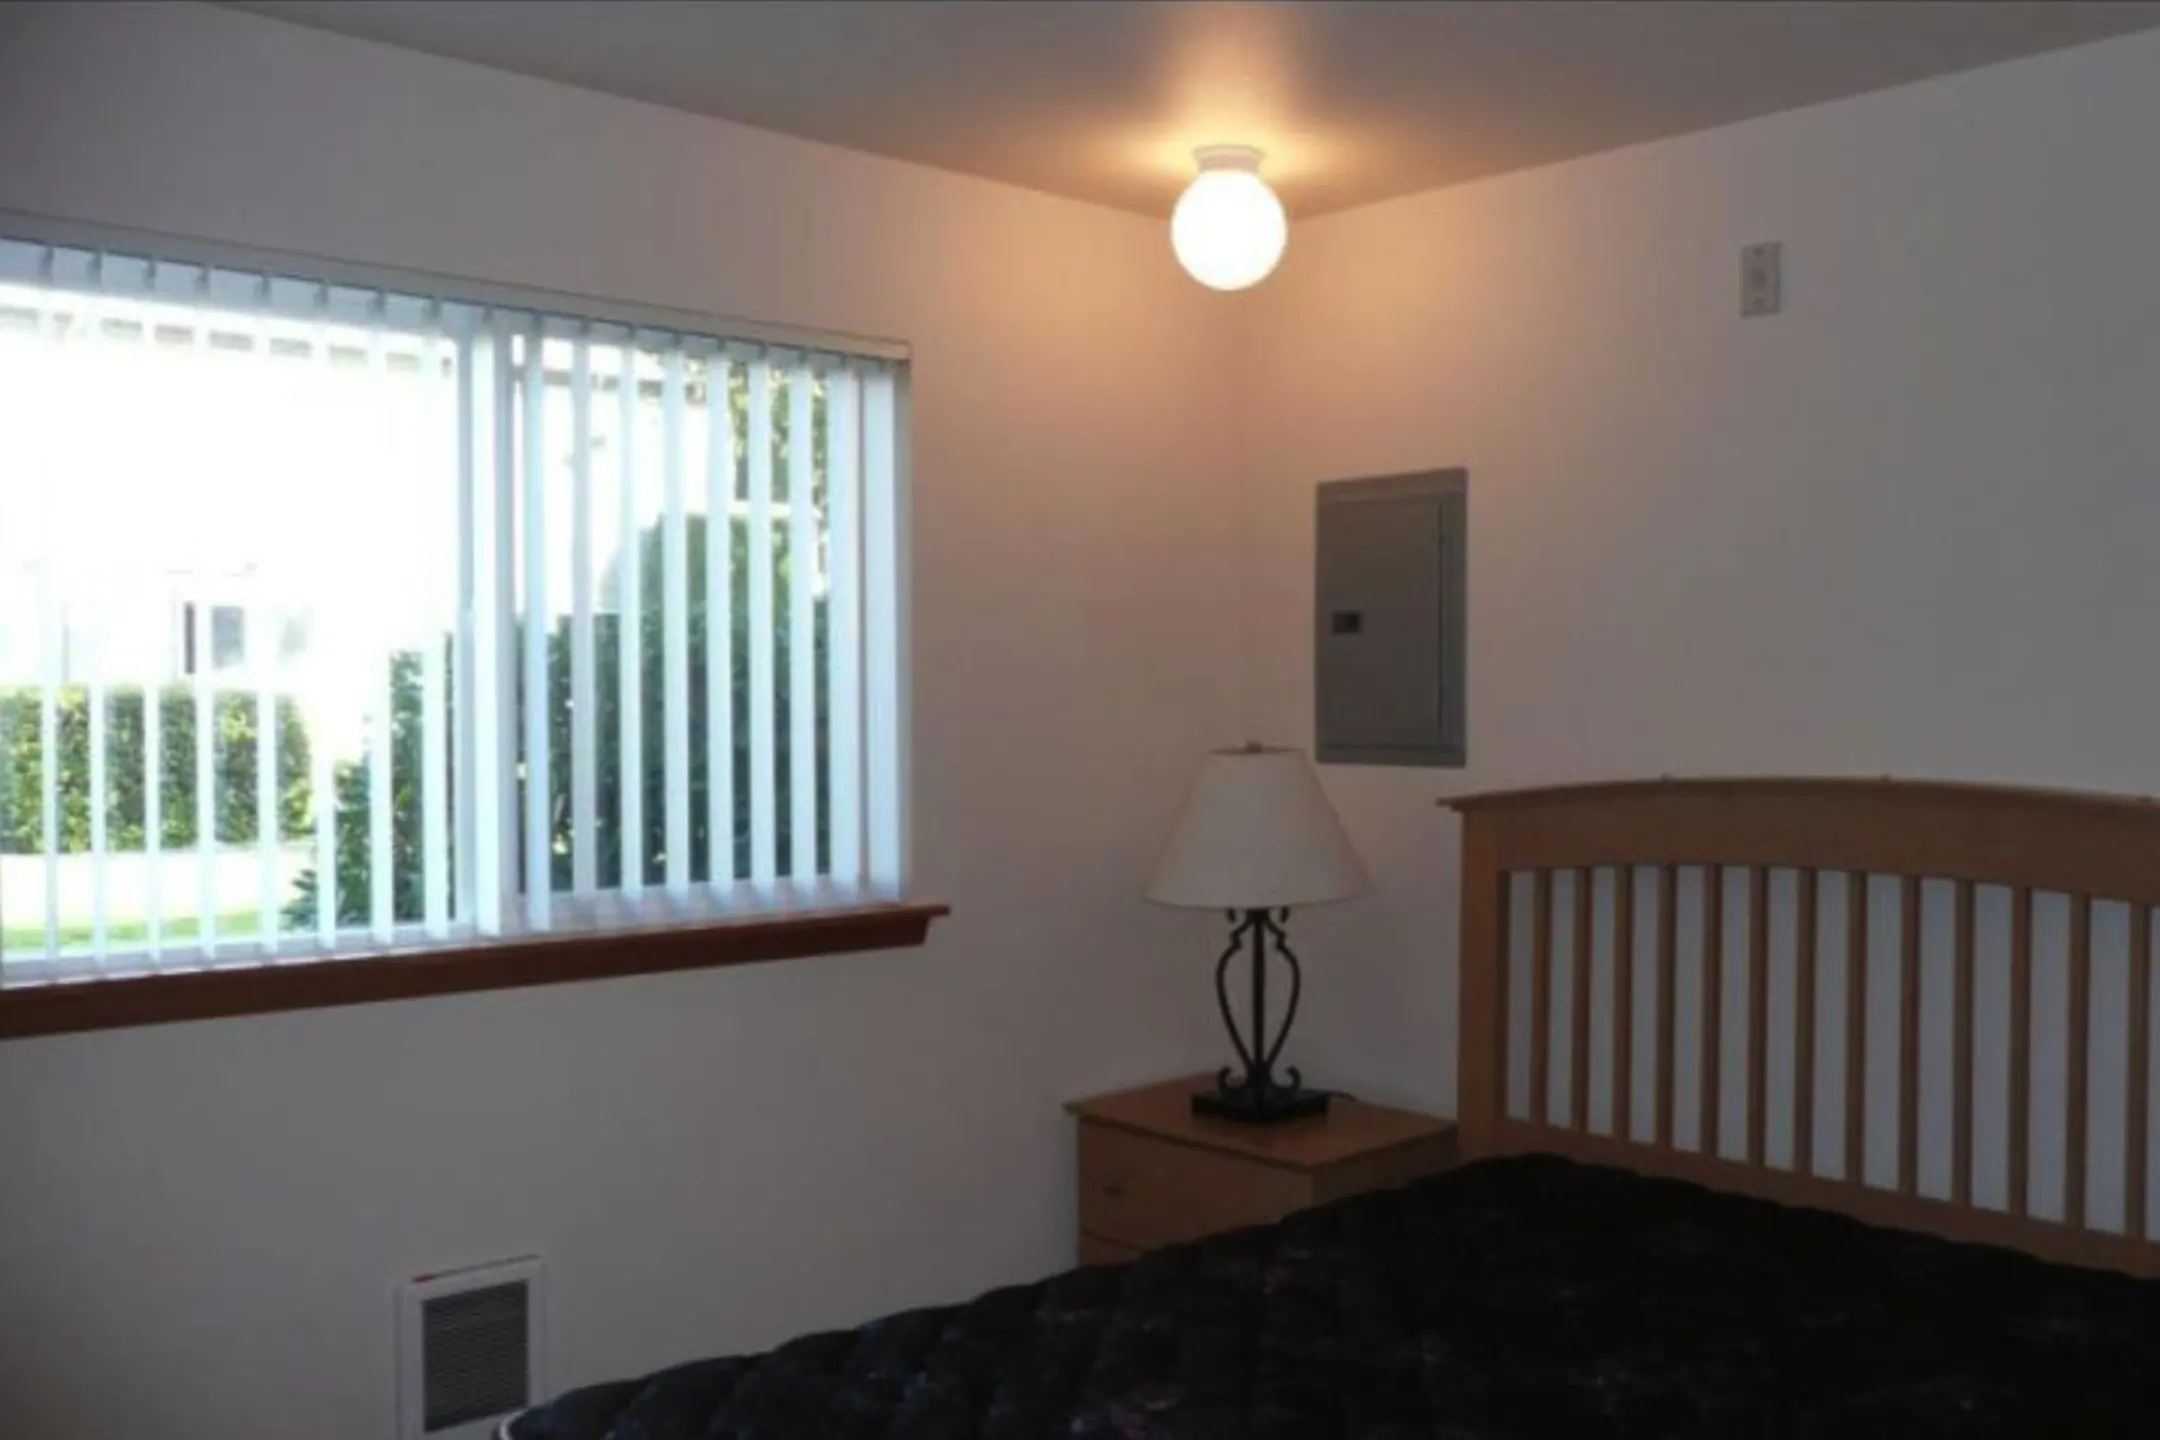 Bedroom - The Village Apartments - Lakewood, WA